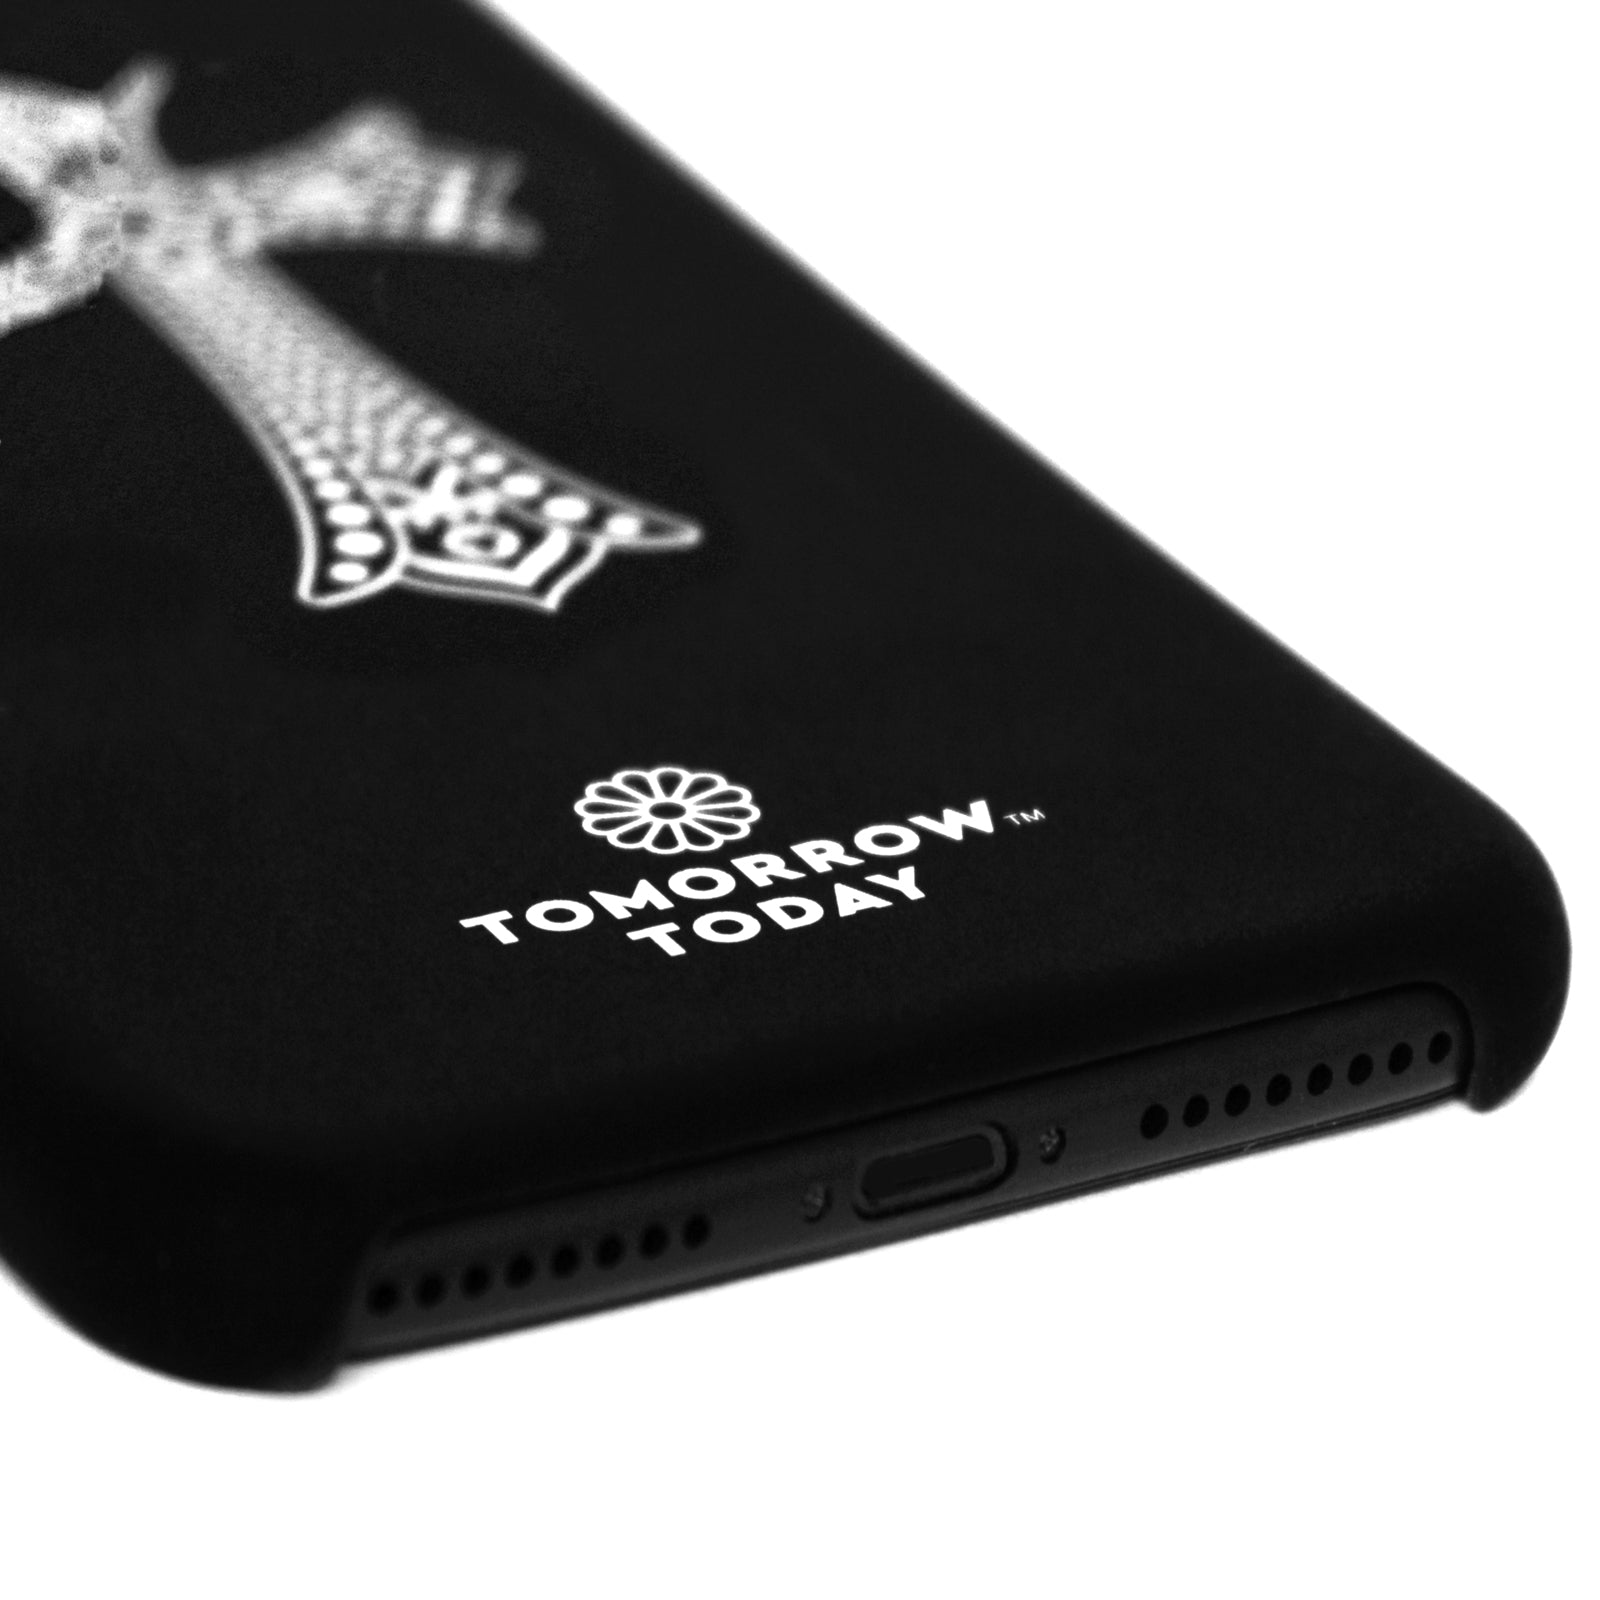 The Cross - iPhone 7/8 Case